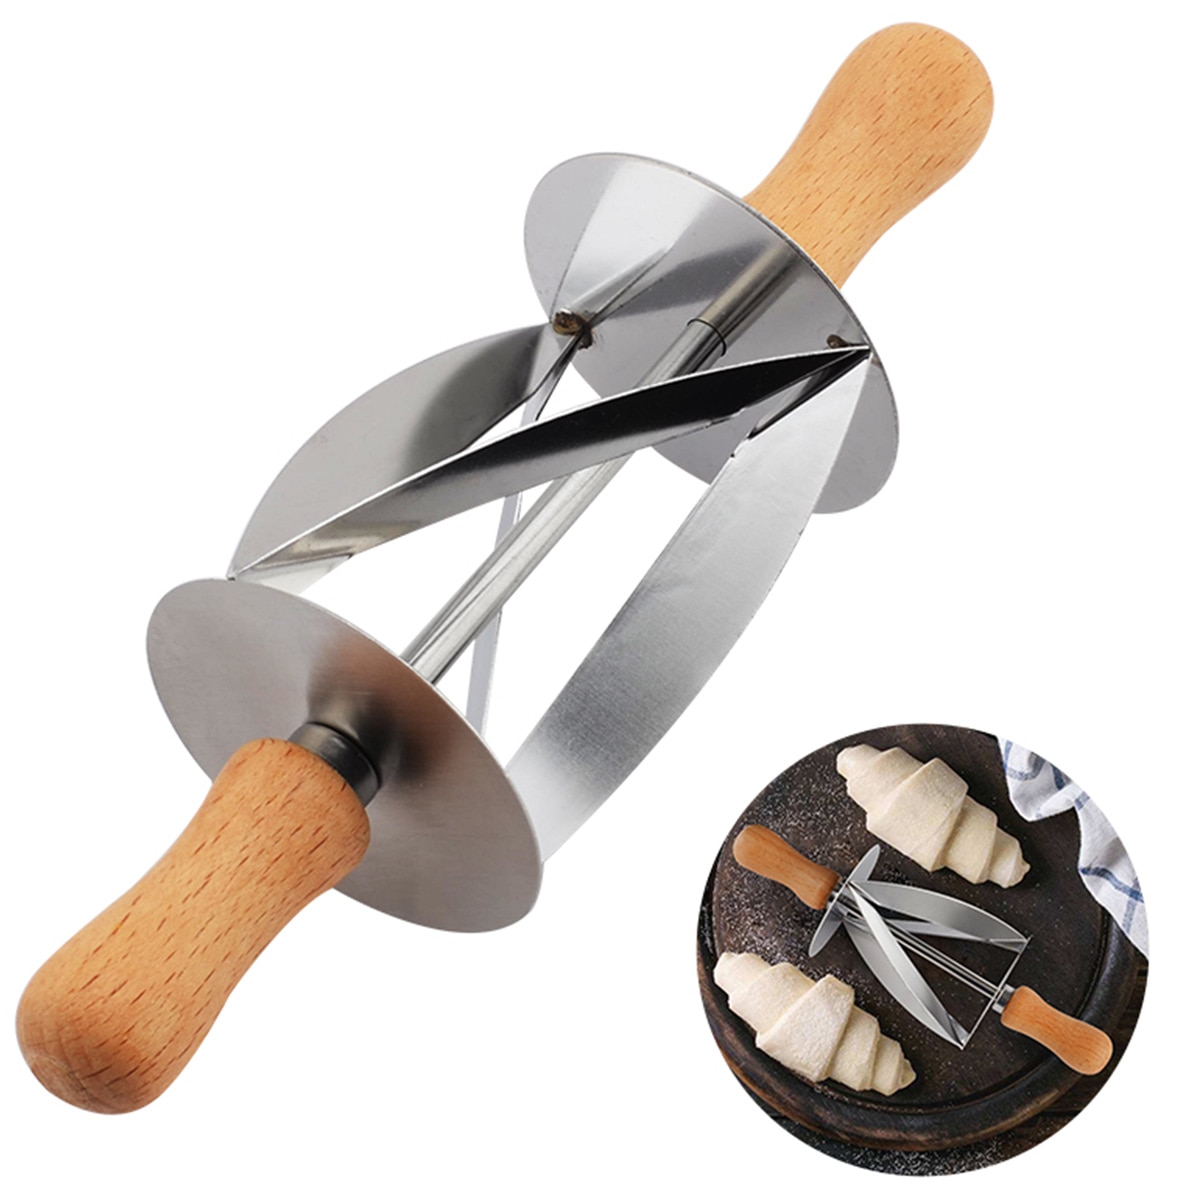 Rolling Cutter Croissant Brood Maker Rvs Roller Plakjes Met Houten Handvat Deeg Mes Keuken Bakken Tools